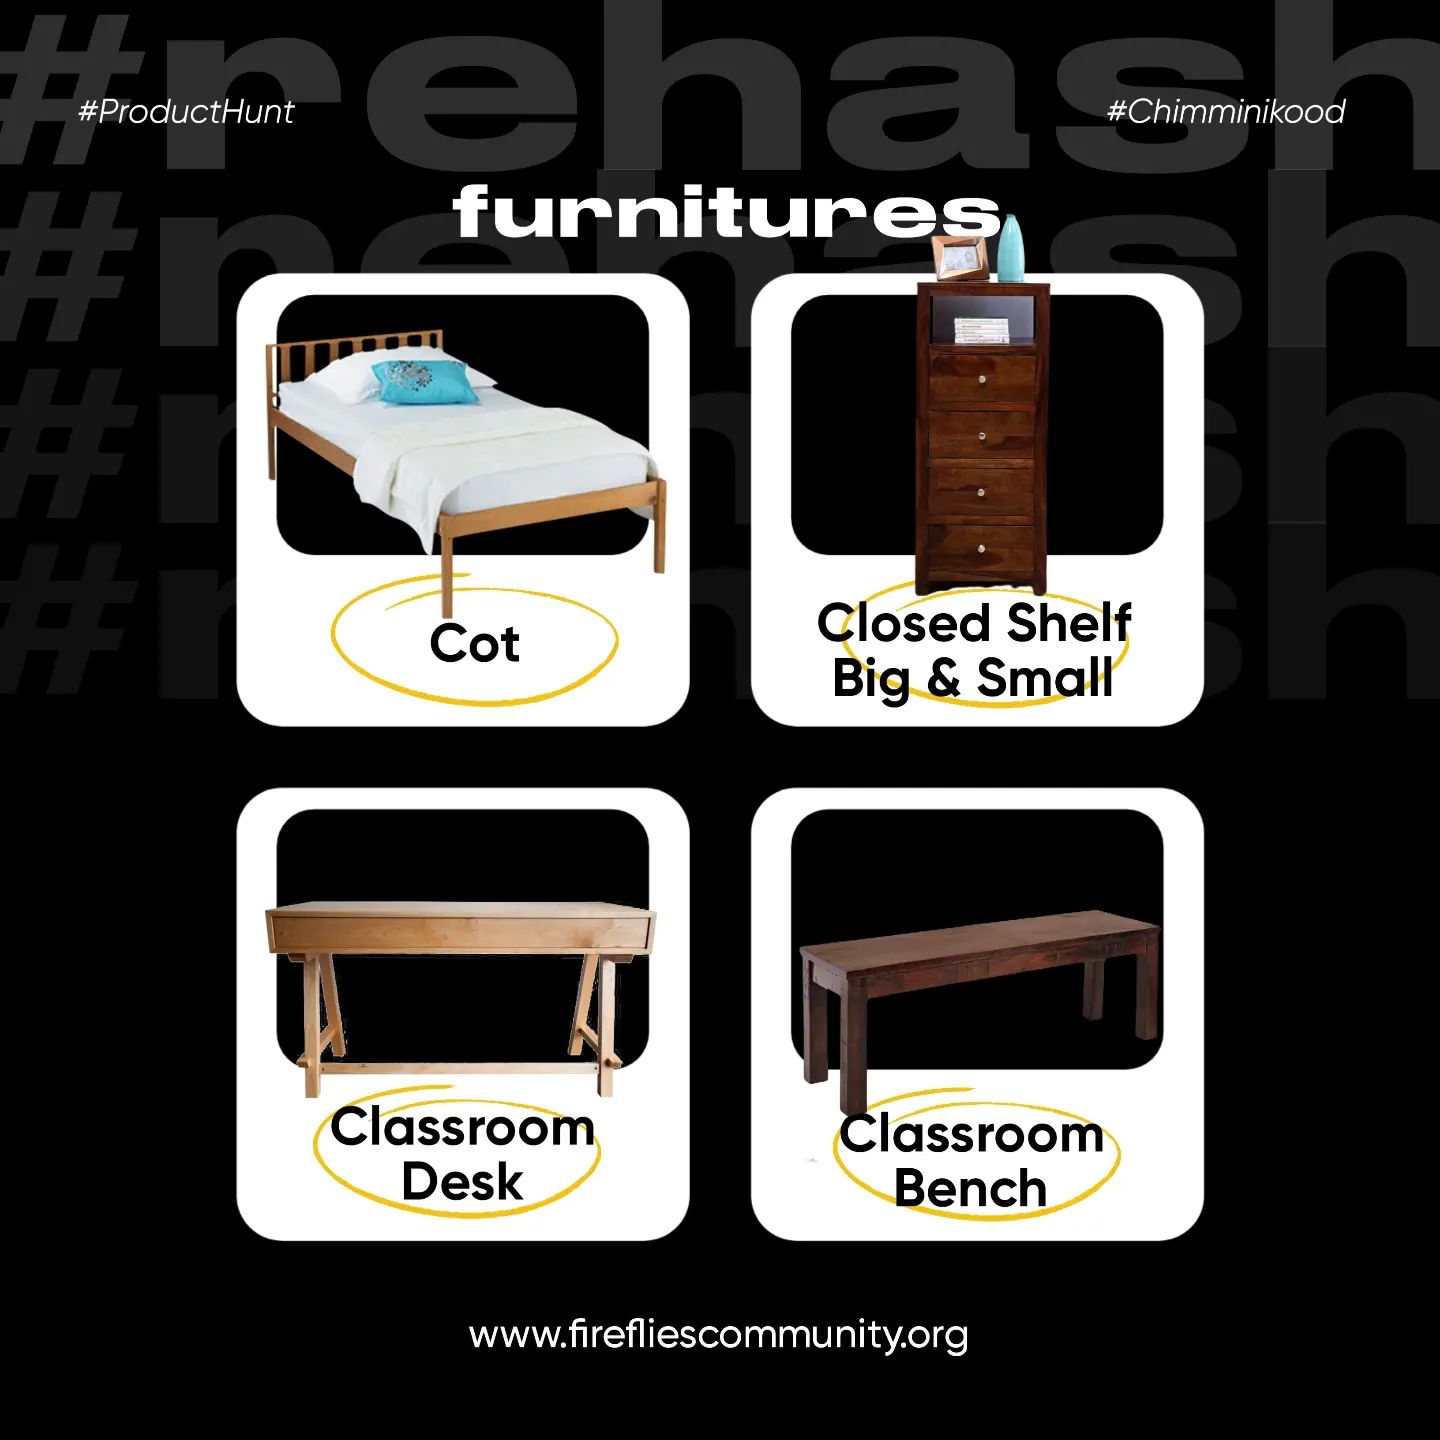 Rehash-producthunt-furniture-3